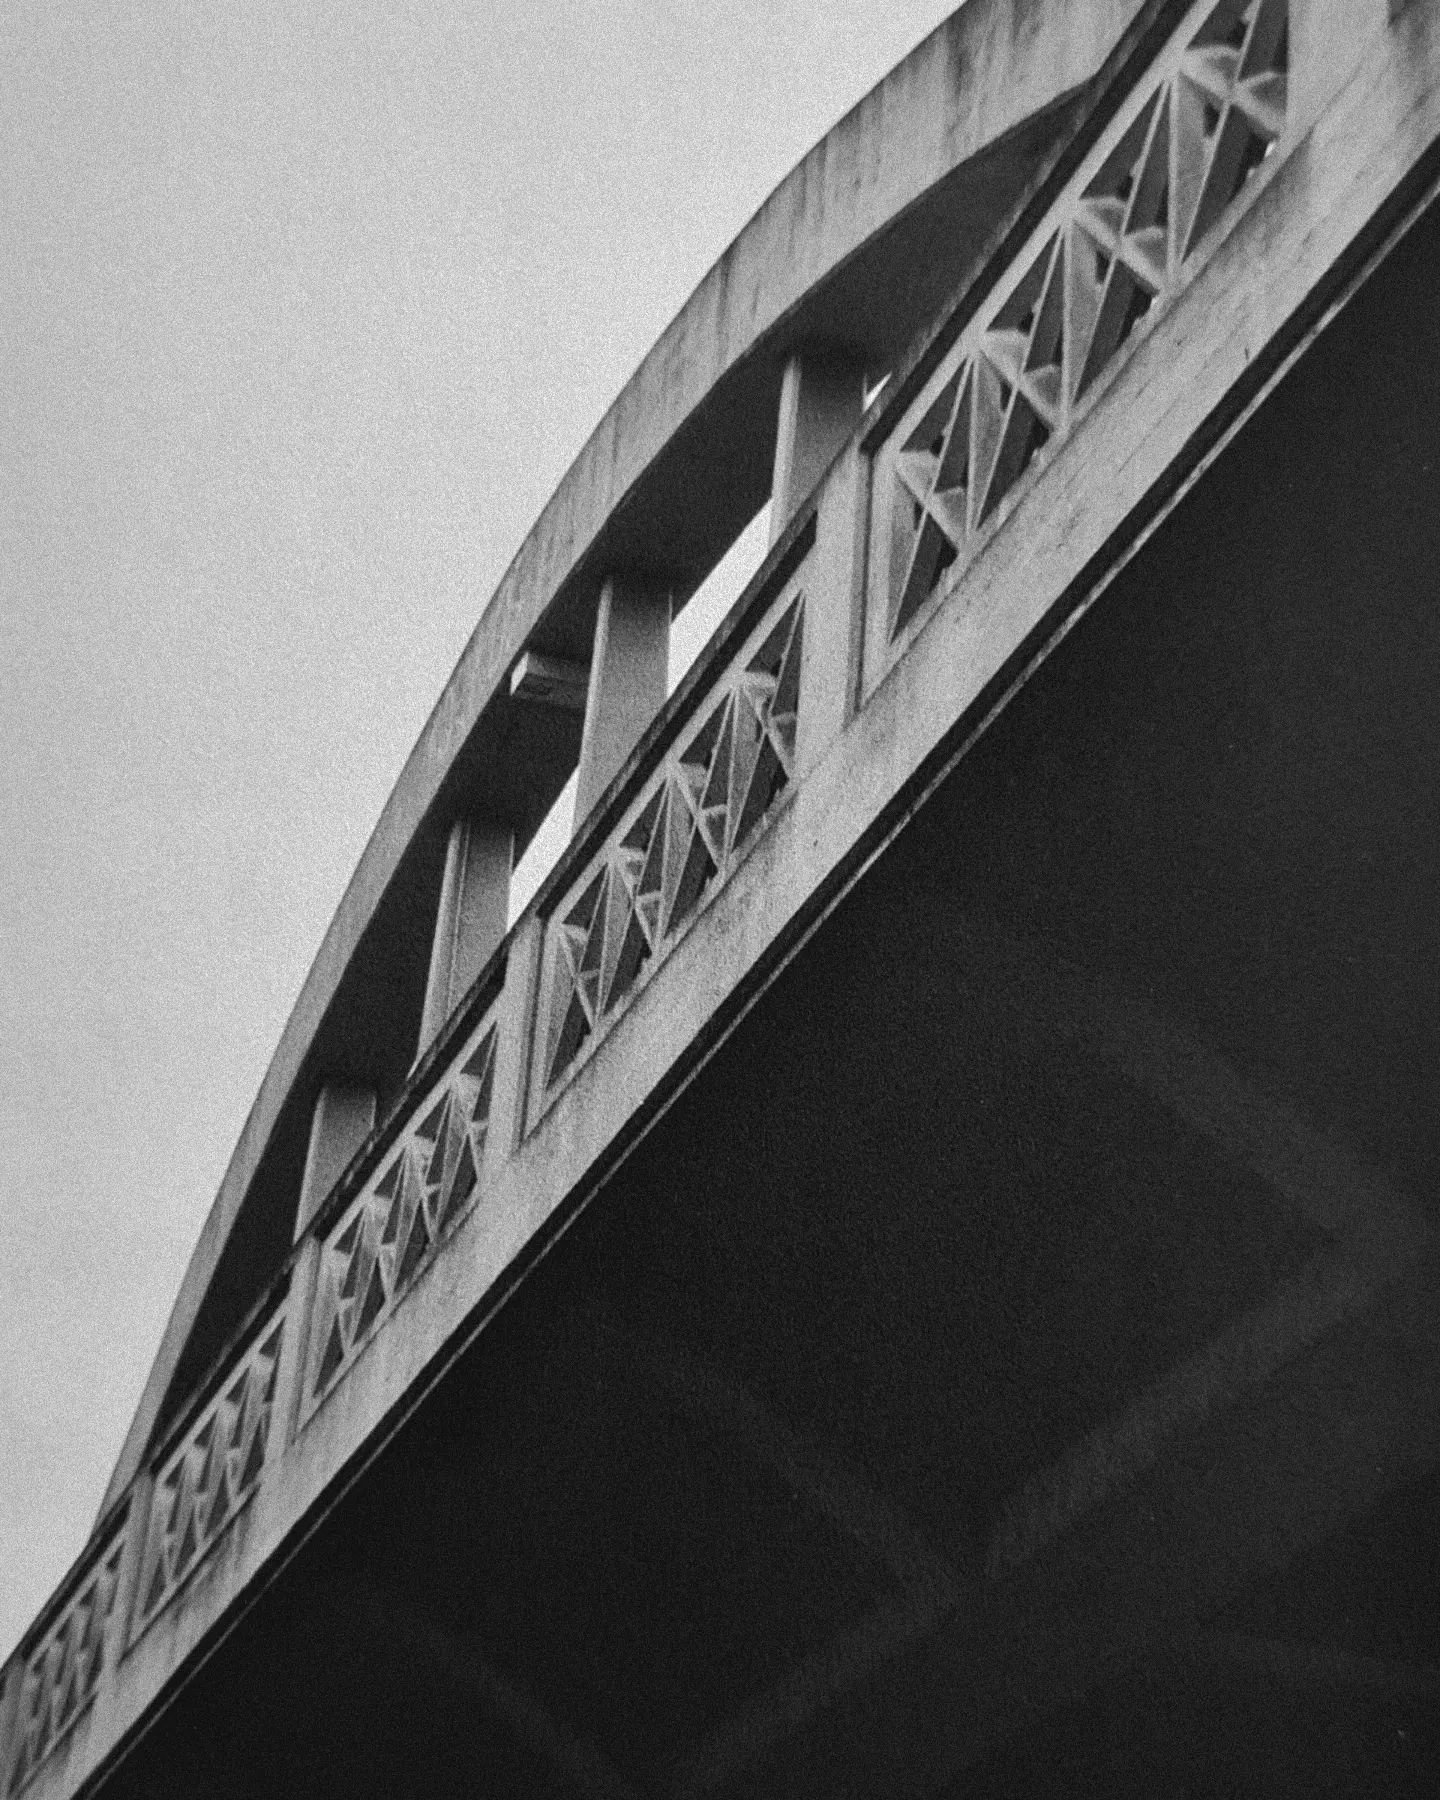 Under Fairfield Bridge- b&amp;w film
#analoguebyg #analoguefilm